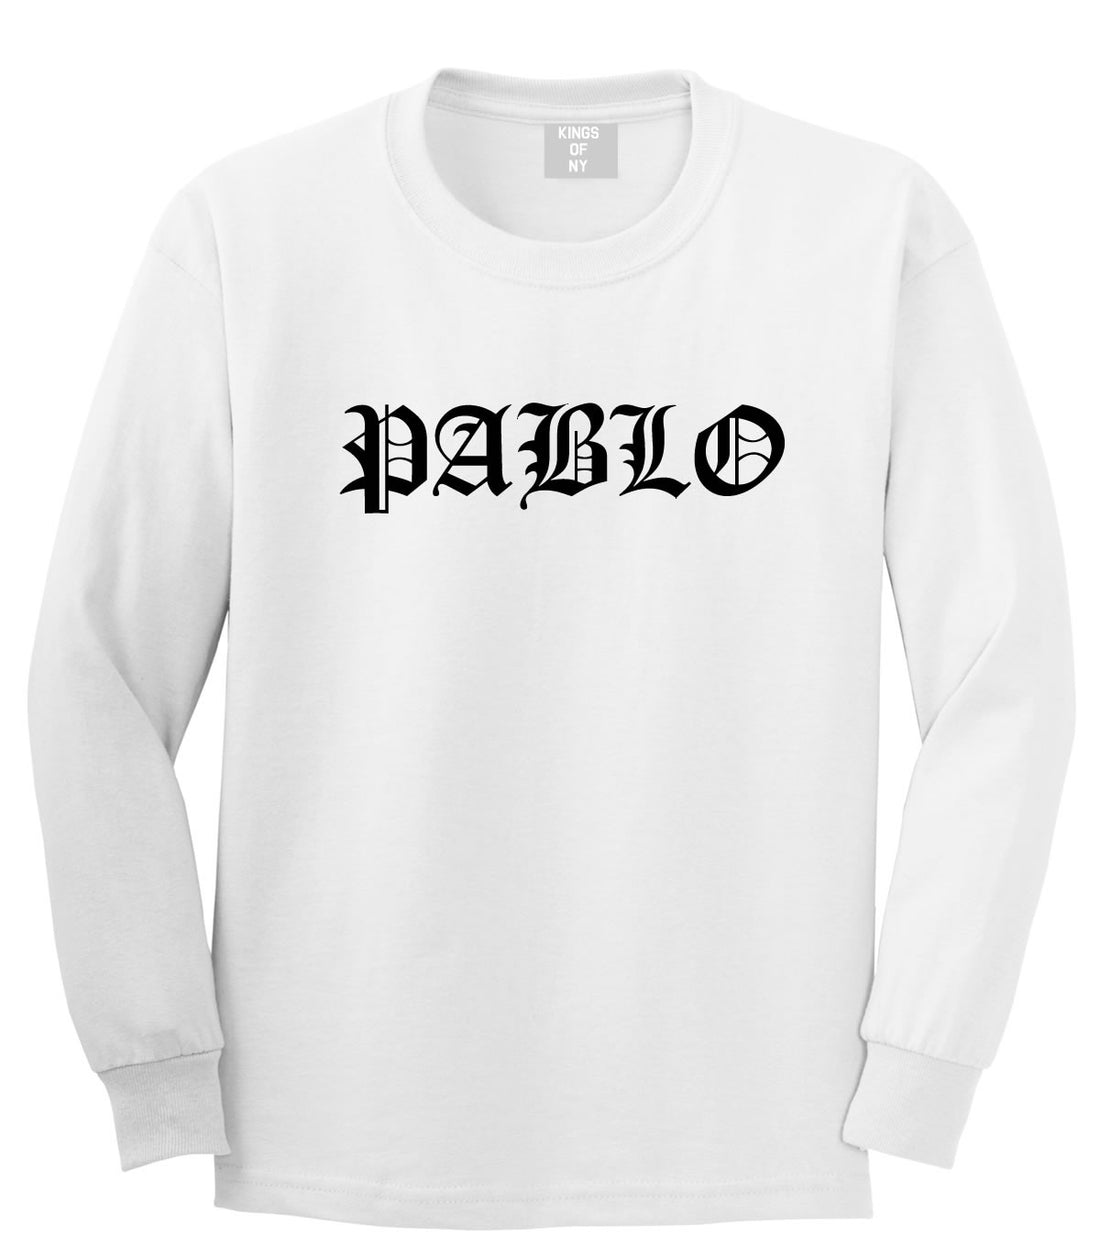 Pablo Long Sleeve T-Shirt